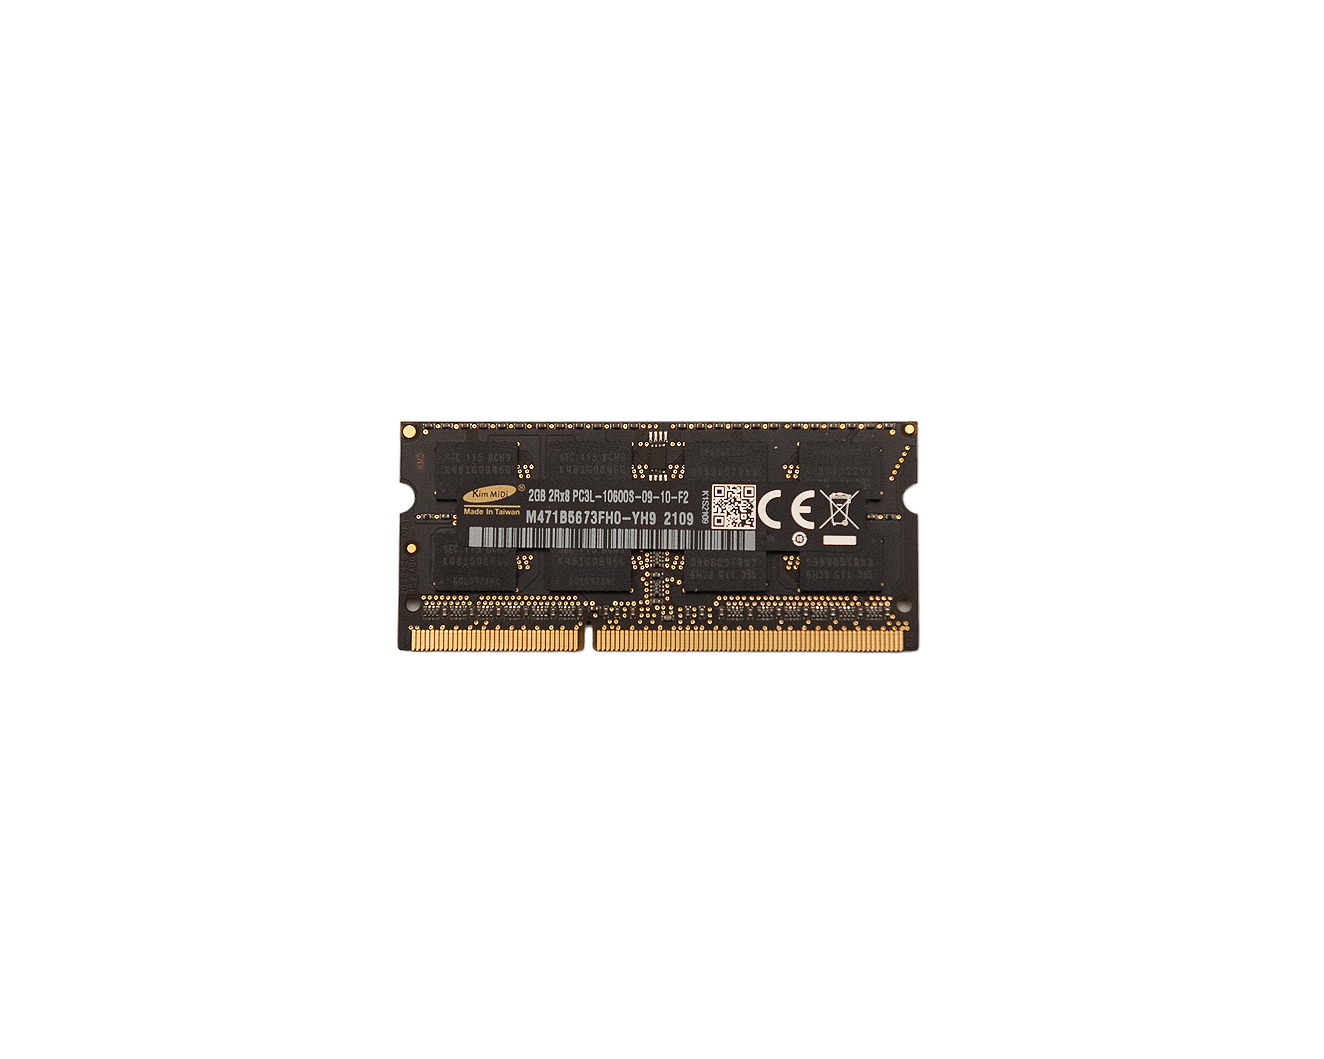 Memória Ram SODIMM Samsung DDR3L 2GB 10600S-09-10-F2 M471B5673FH0-YH9 2109